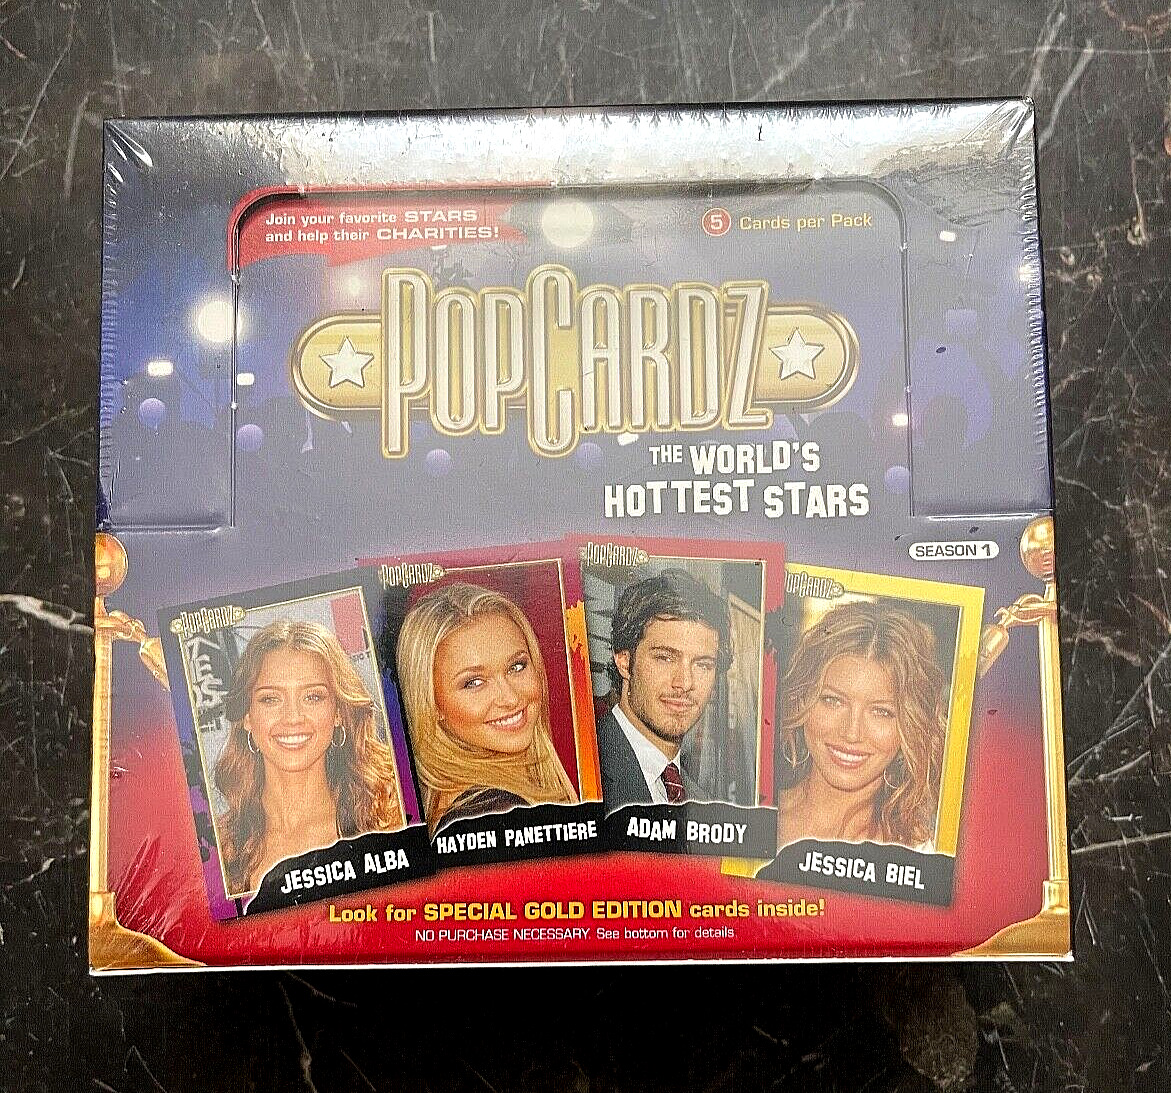 2008 POPCARDZ Season 1 World\'s Hottest Stars Sealed w/Gold Edition Cards-RARE